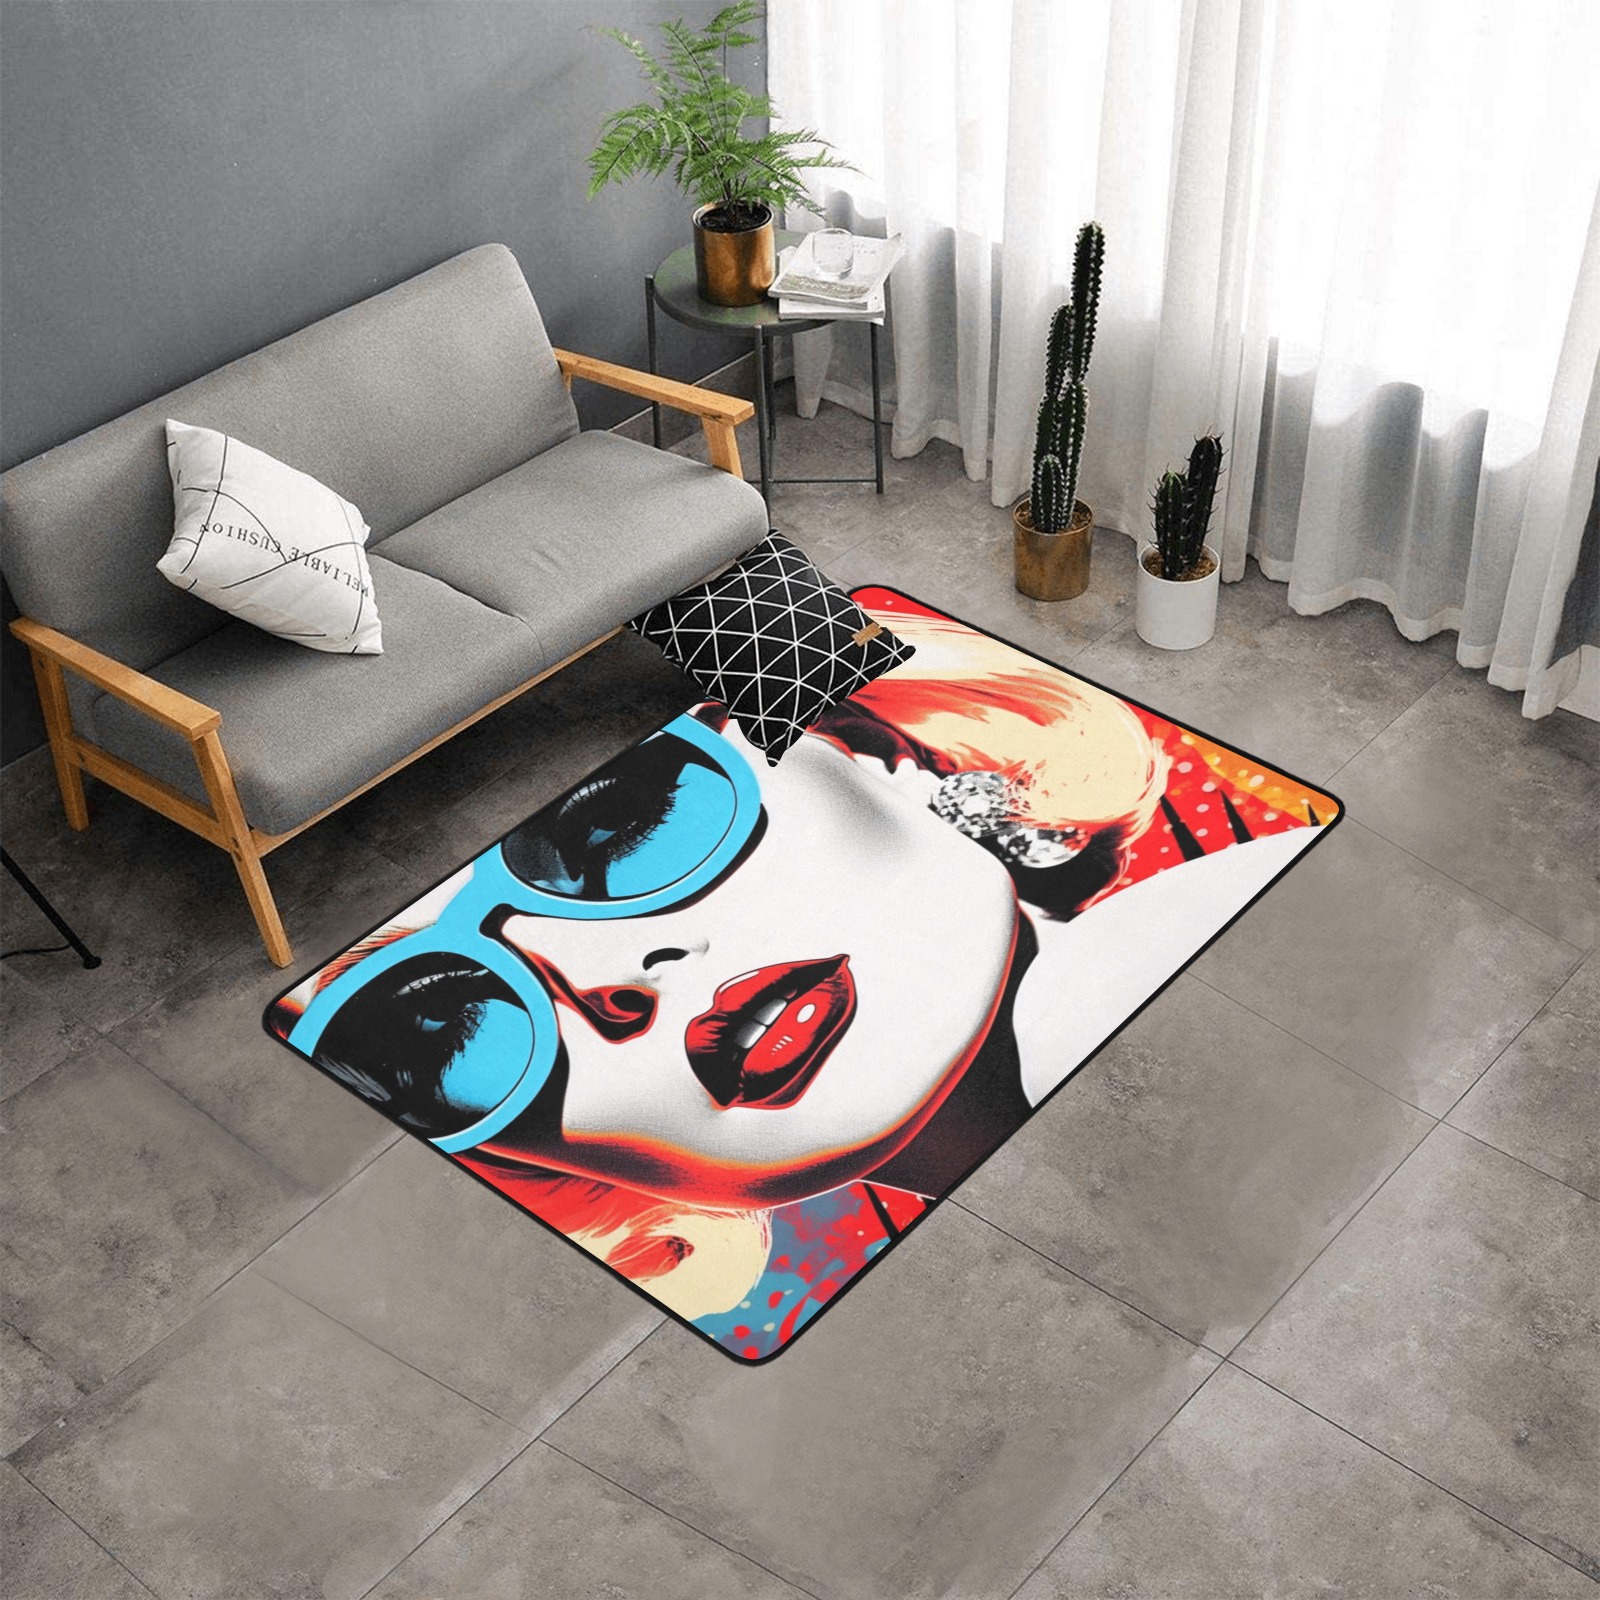 Diamond Jill Retro Glam Pop Art Lady Area Rug Blue Sunshades Classic Red Lipstick Area Rug with Black Binding 5'3''x4'